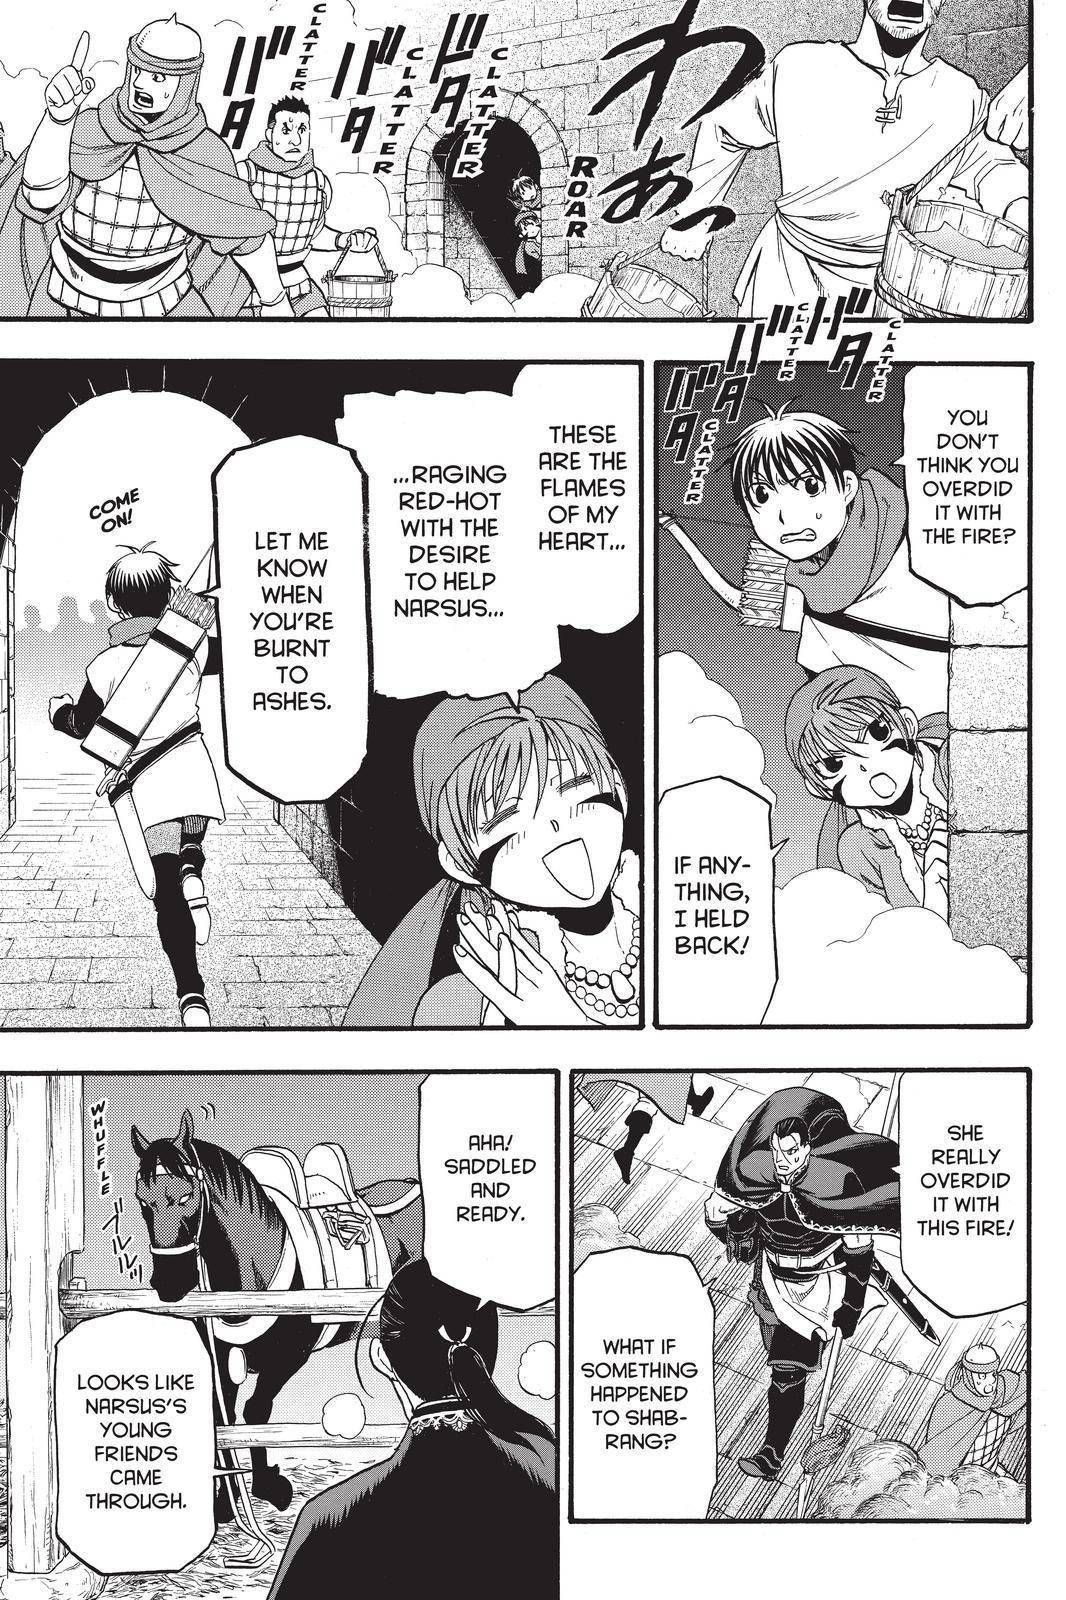 Arslan Senki (ARAKAWA Hiromu) chapter 92 page 17